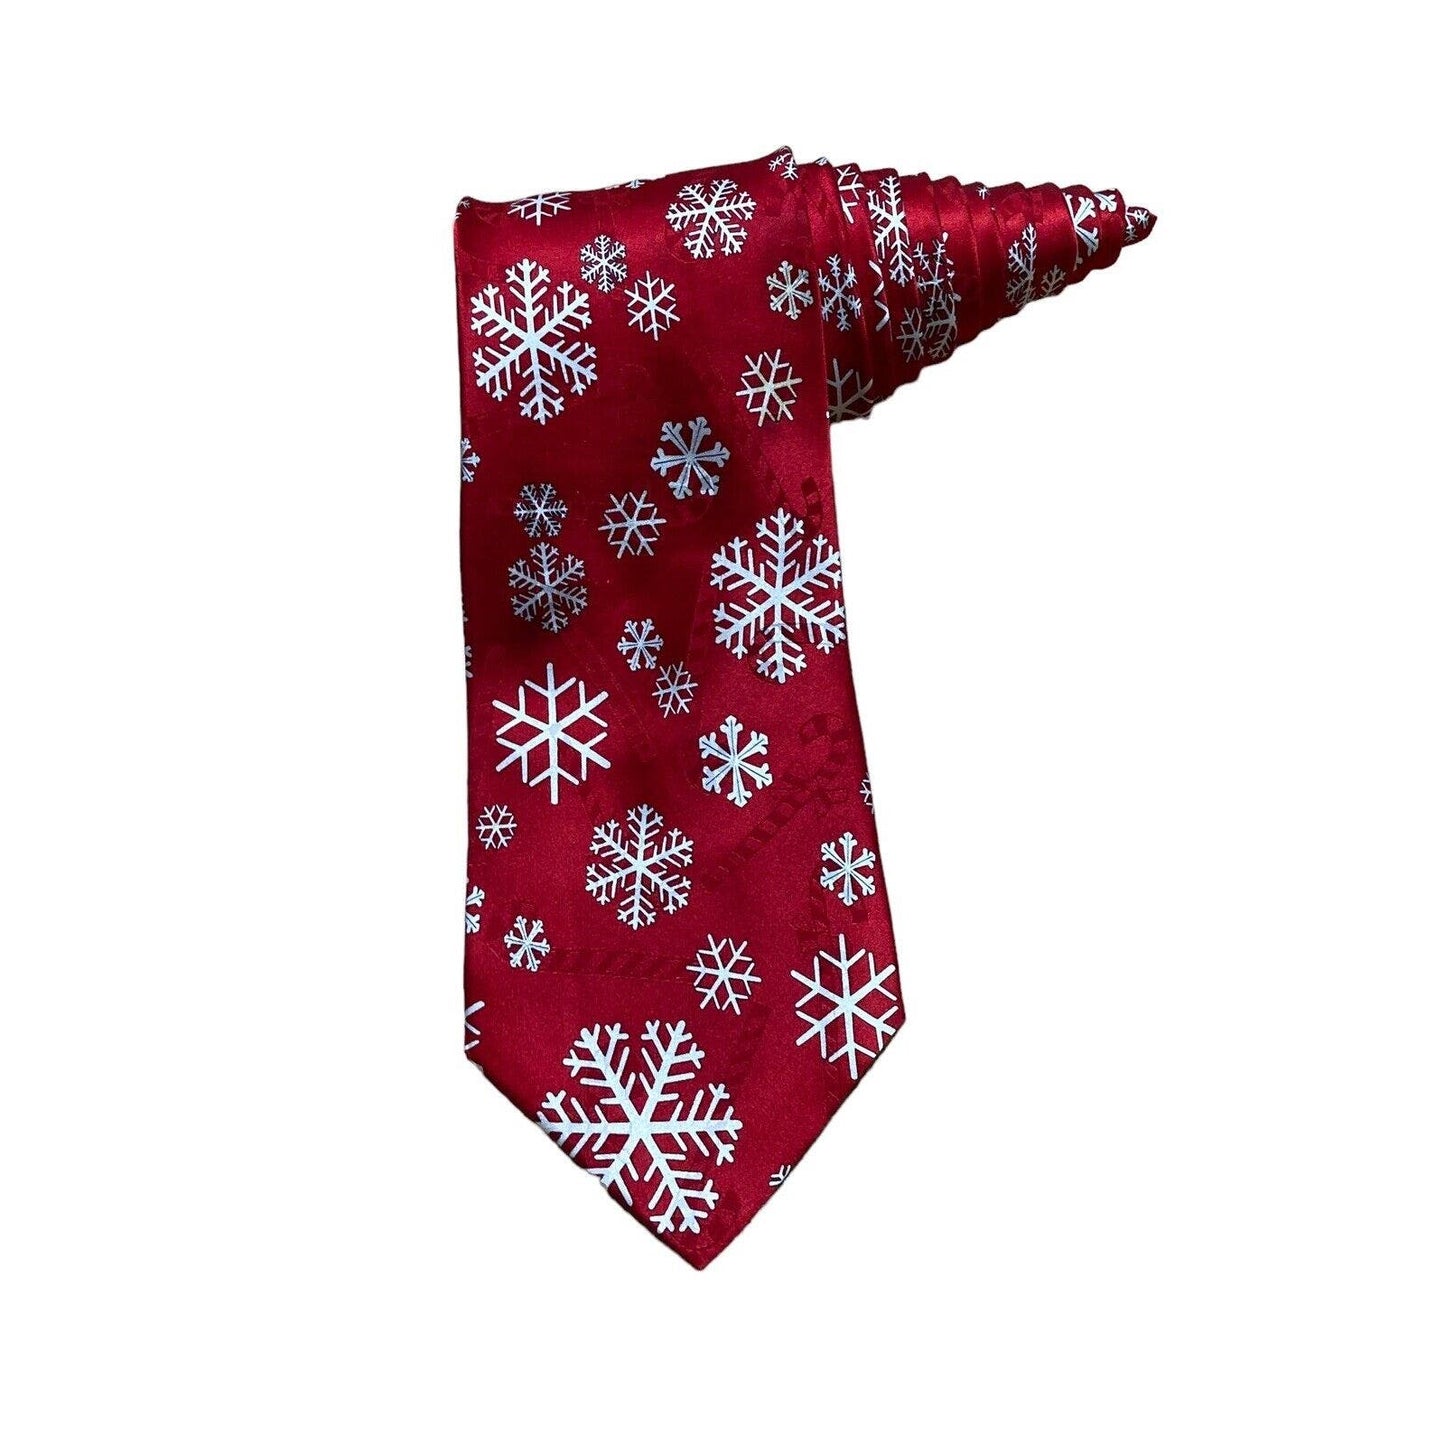 Hallmark Special Ties Snowflakes Snow Holiday Christmas Novelty Vintage Necktie